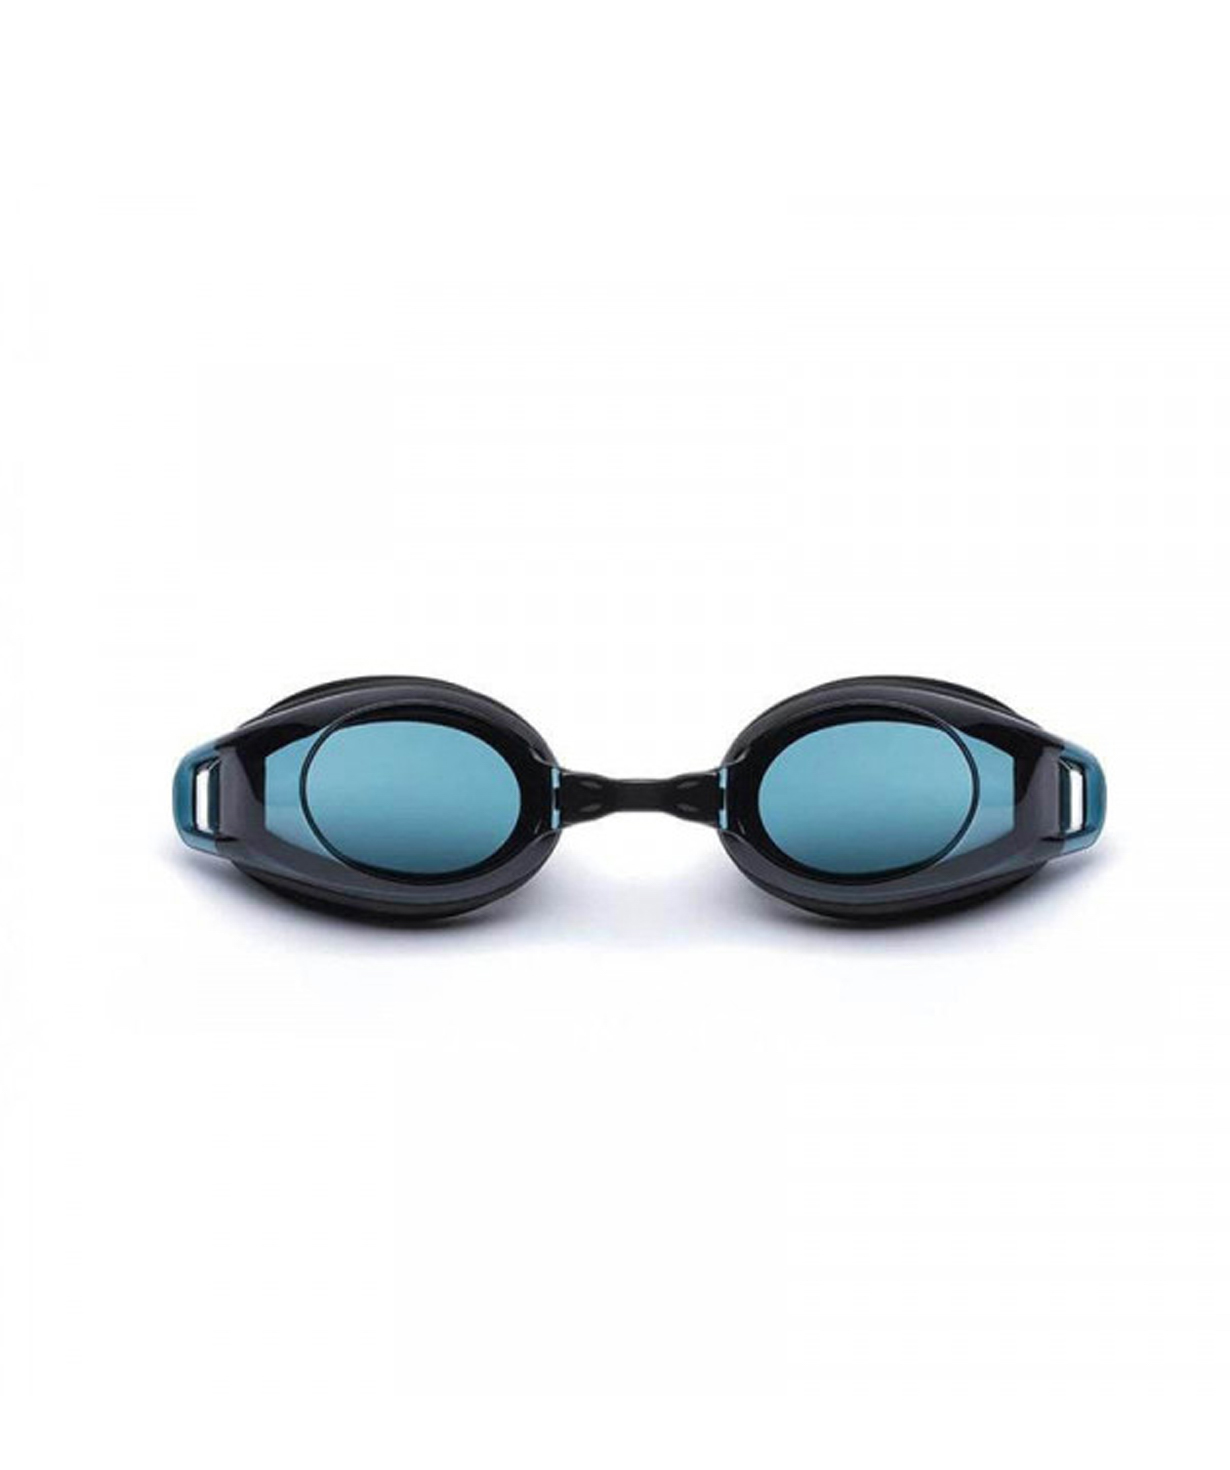 Swimming goggles `Xiaomi Turok Steinhardt TS` For adults